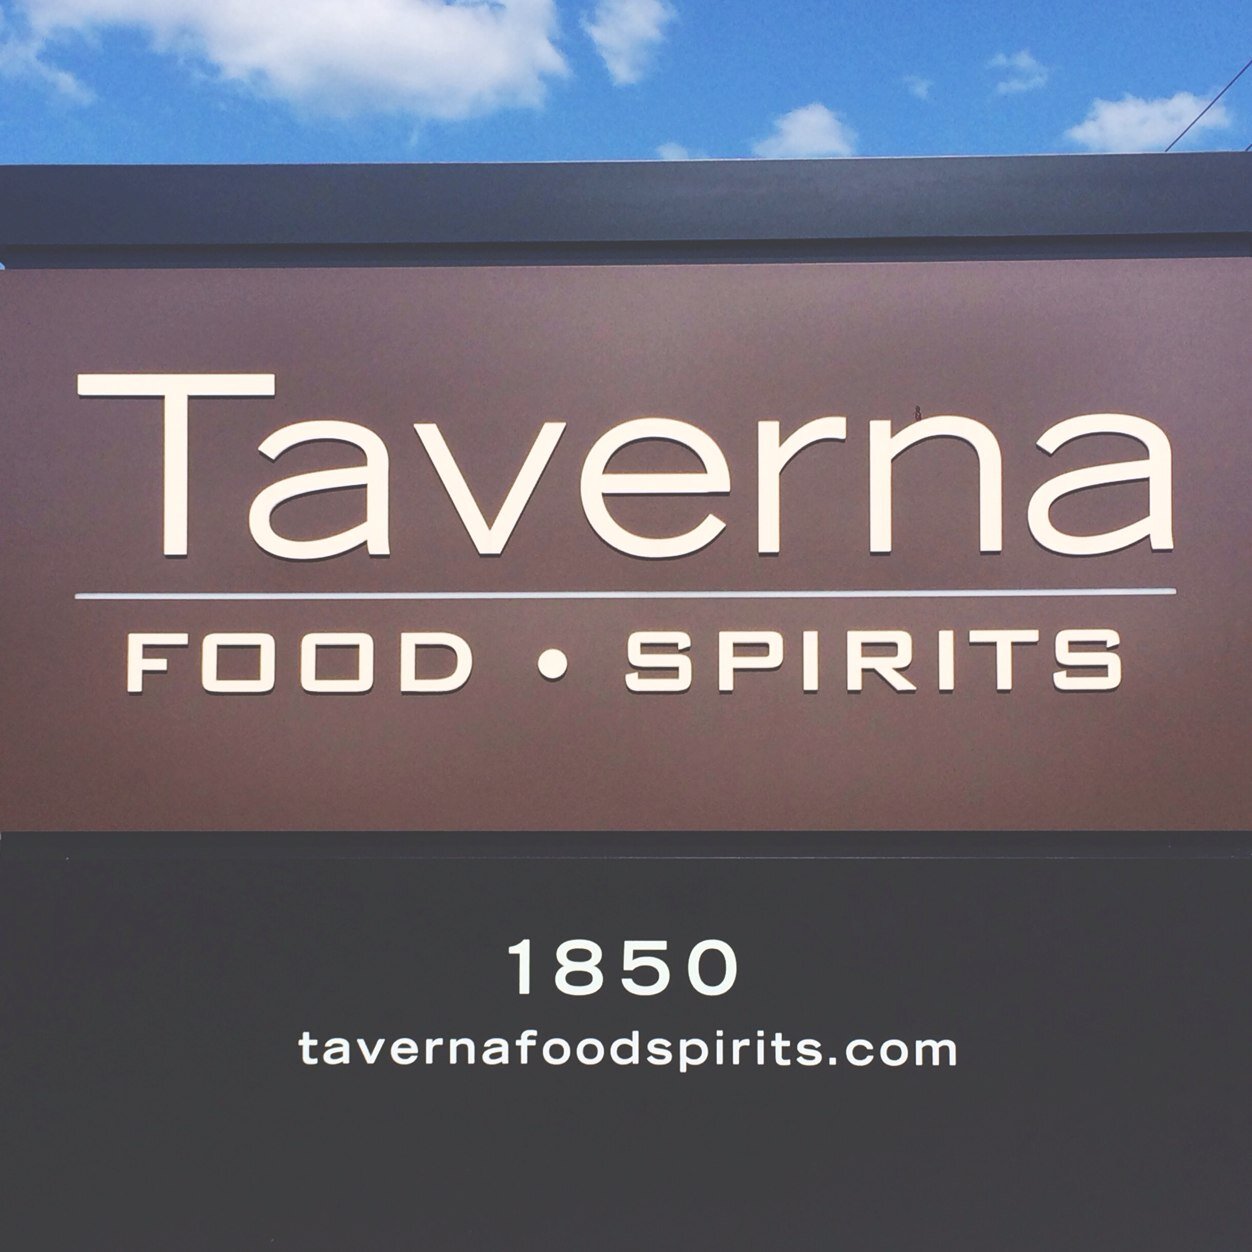 Taverna Food • Spirits